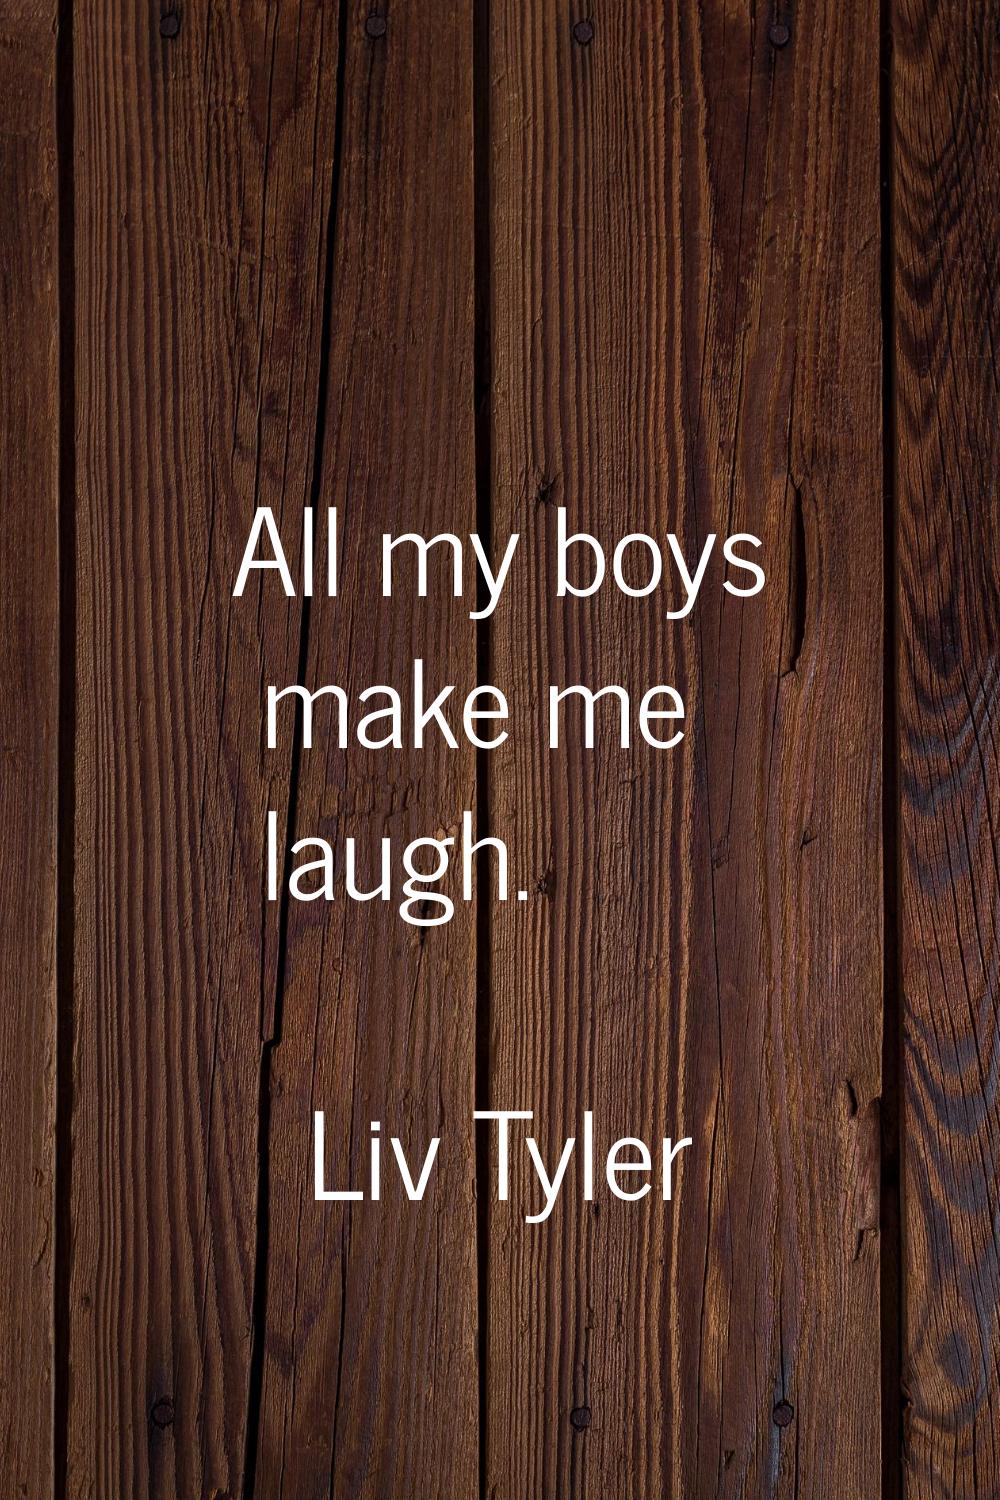 All my boys make me laugh.